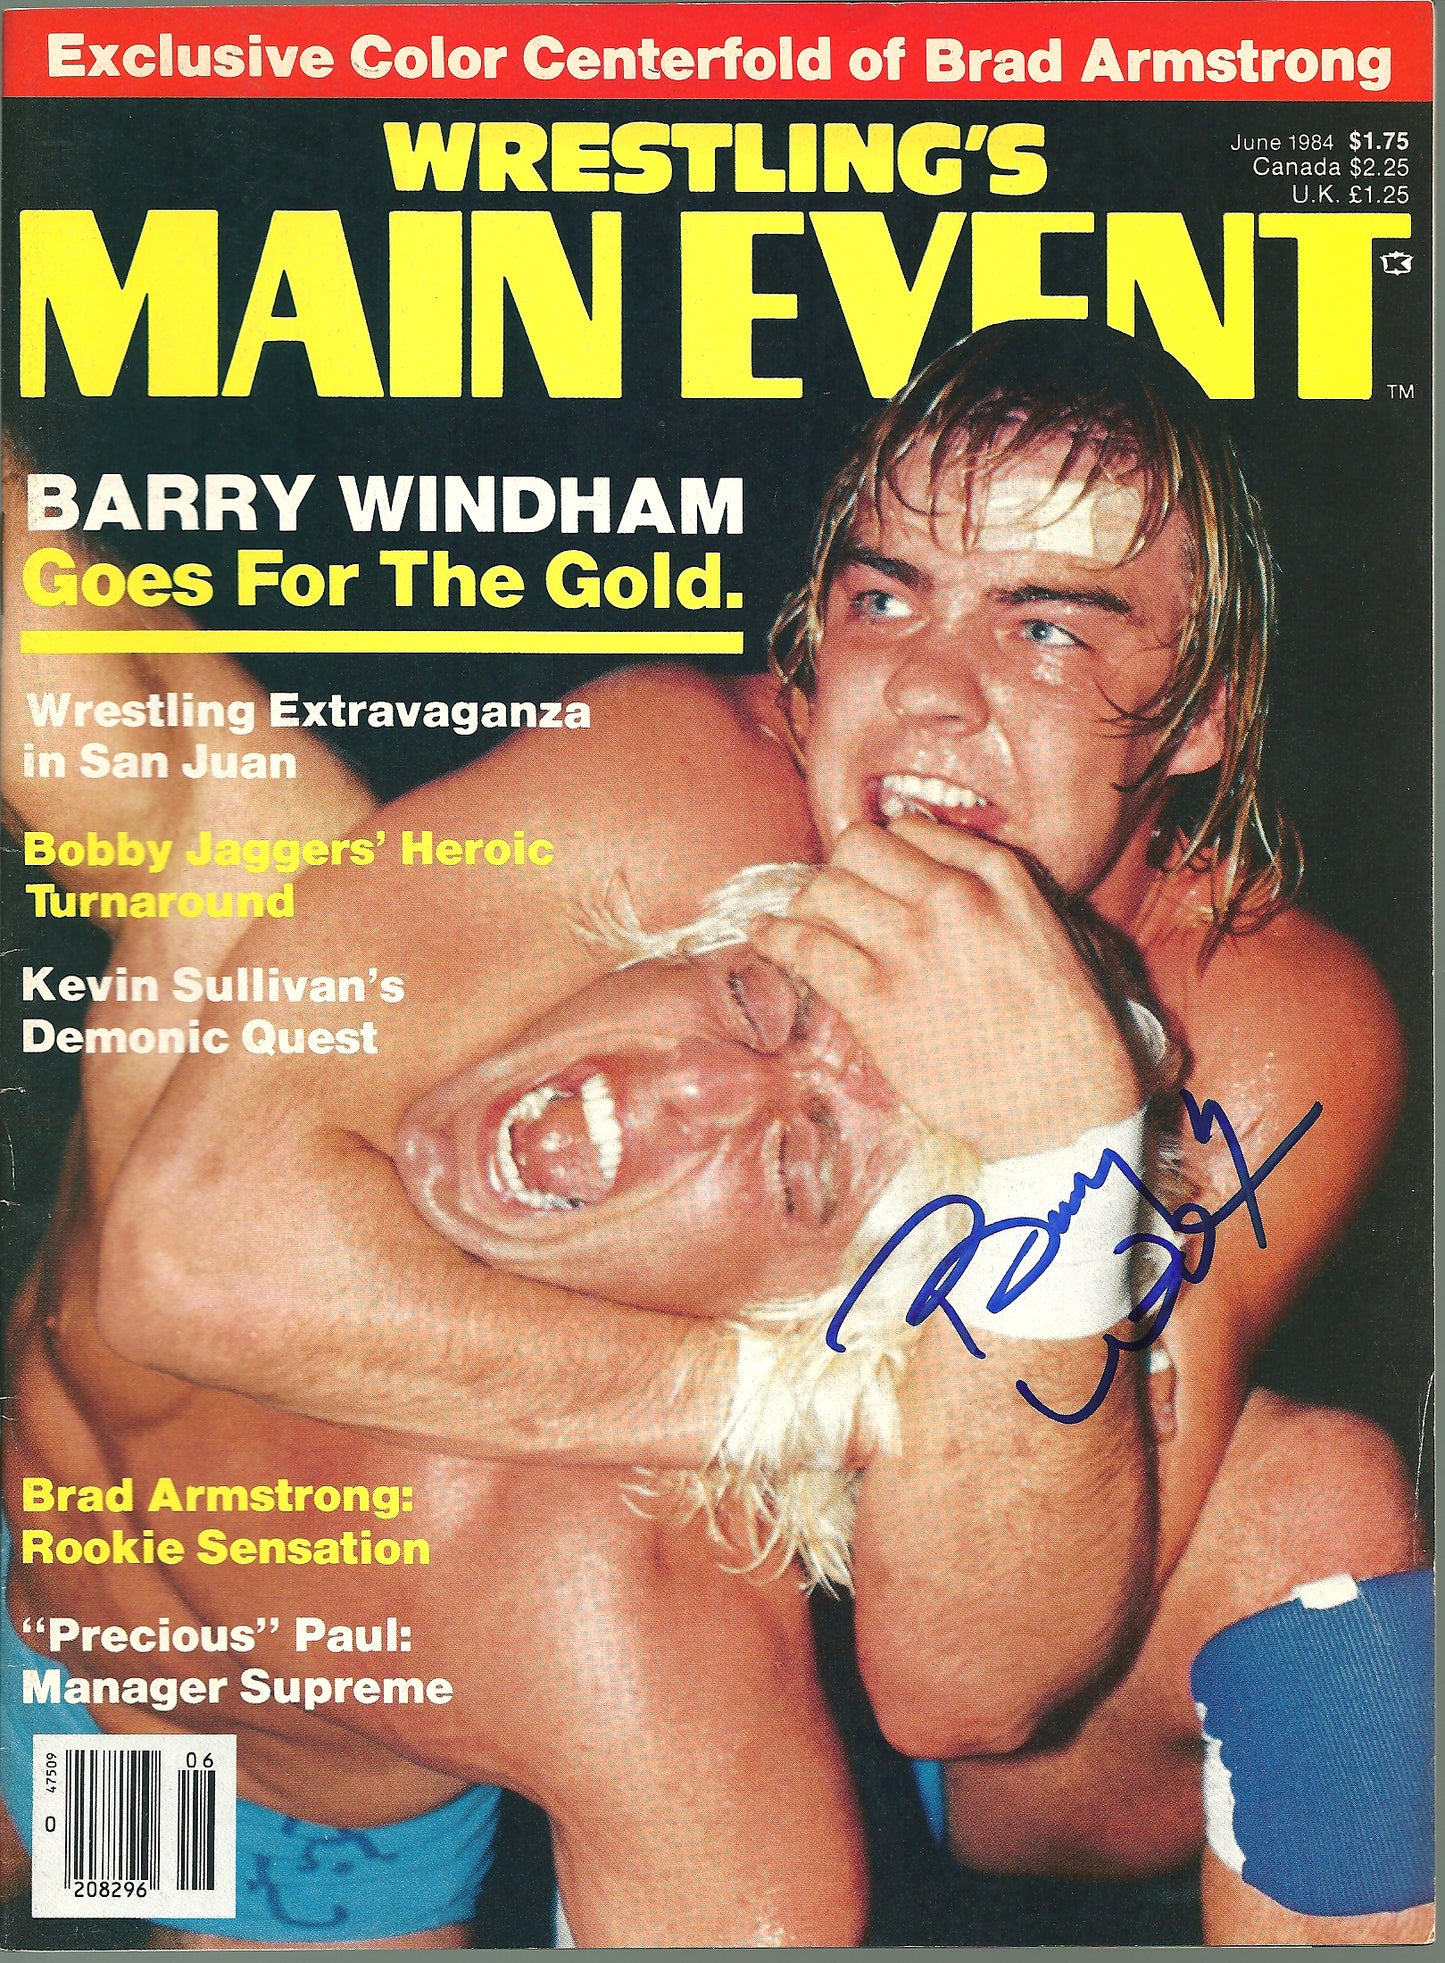 AM475   Barry Windham  Autographed Vintage Wrestling Magazine w/COA